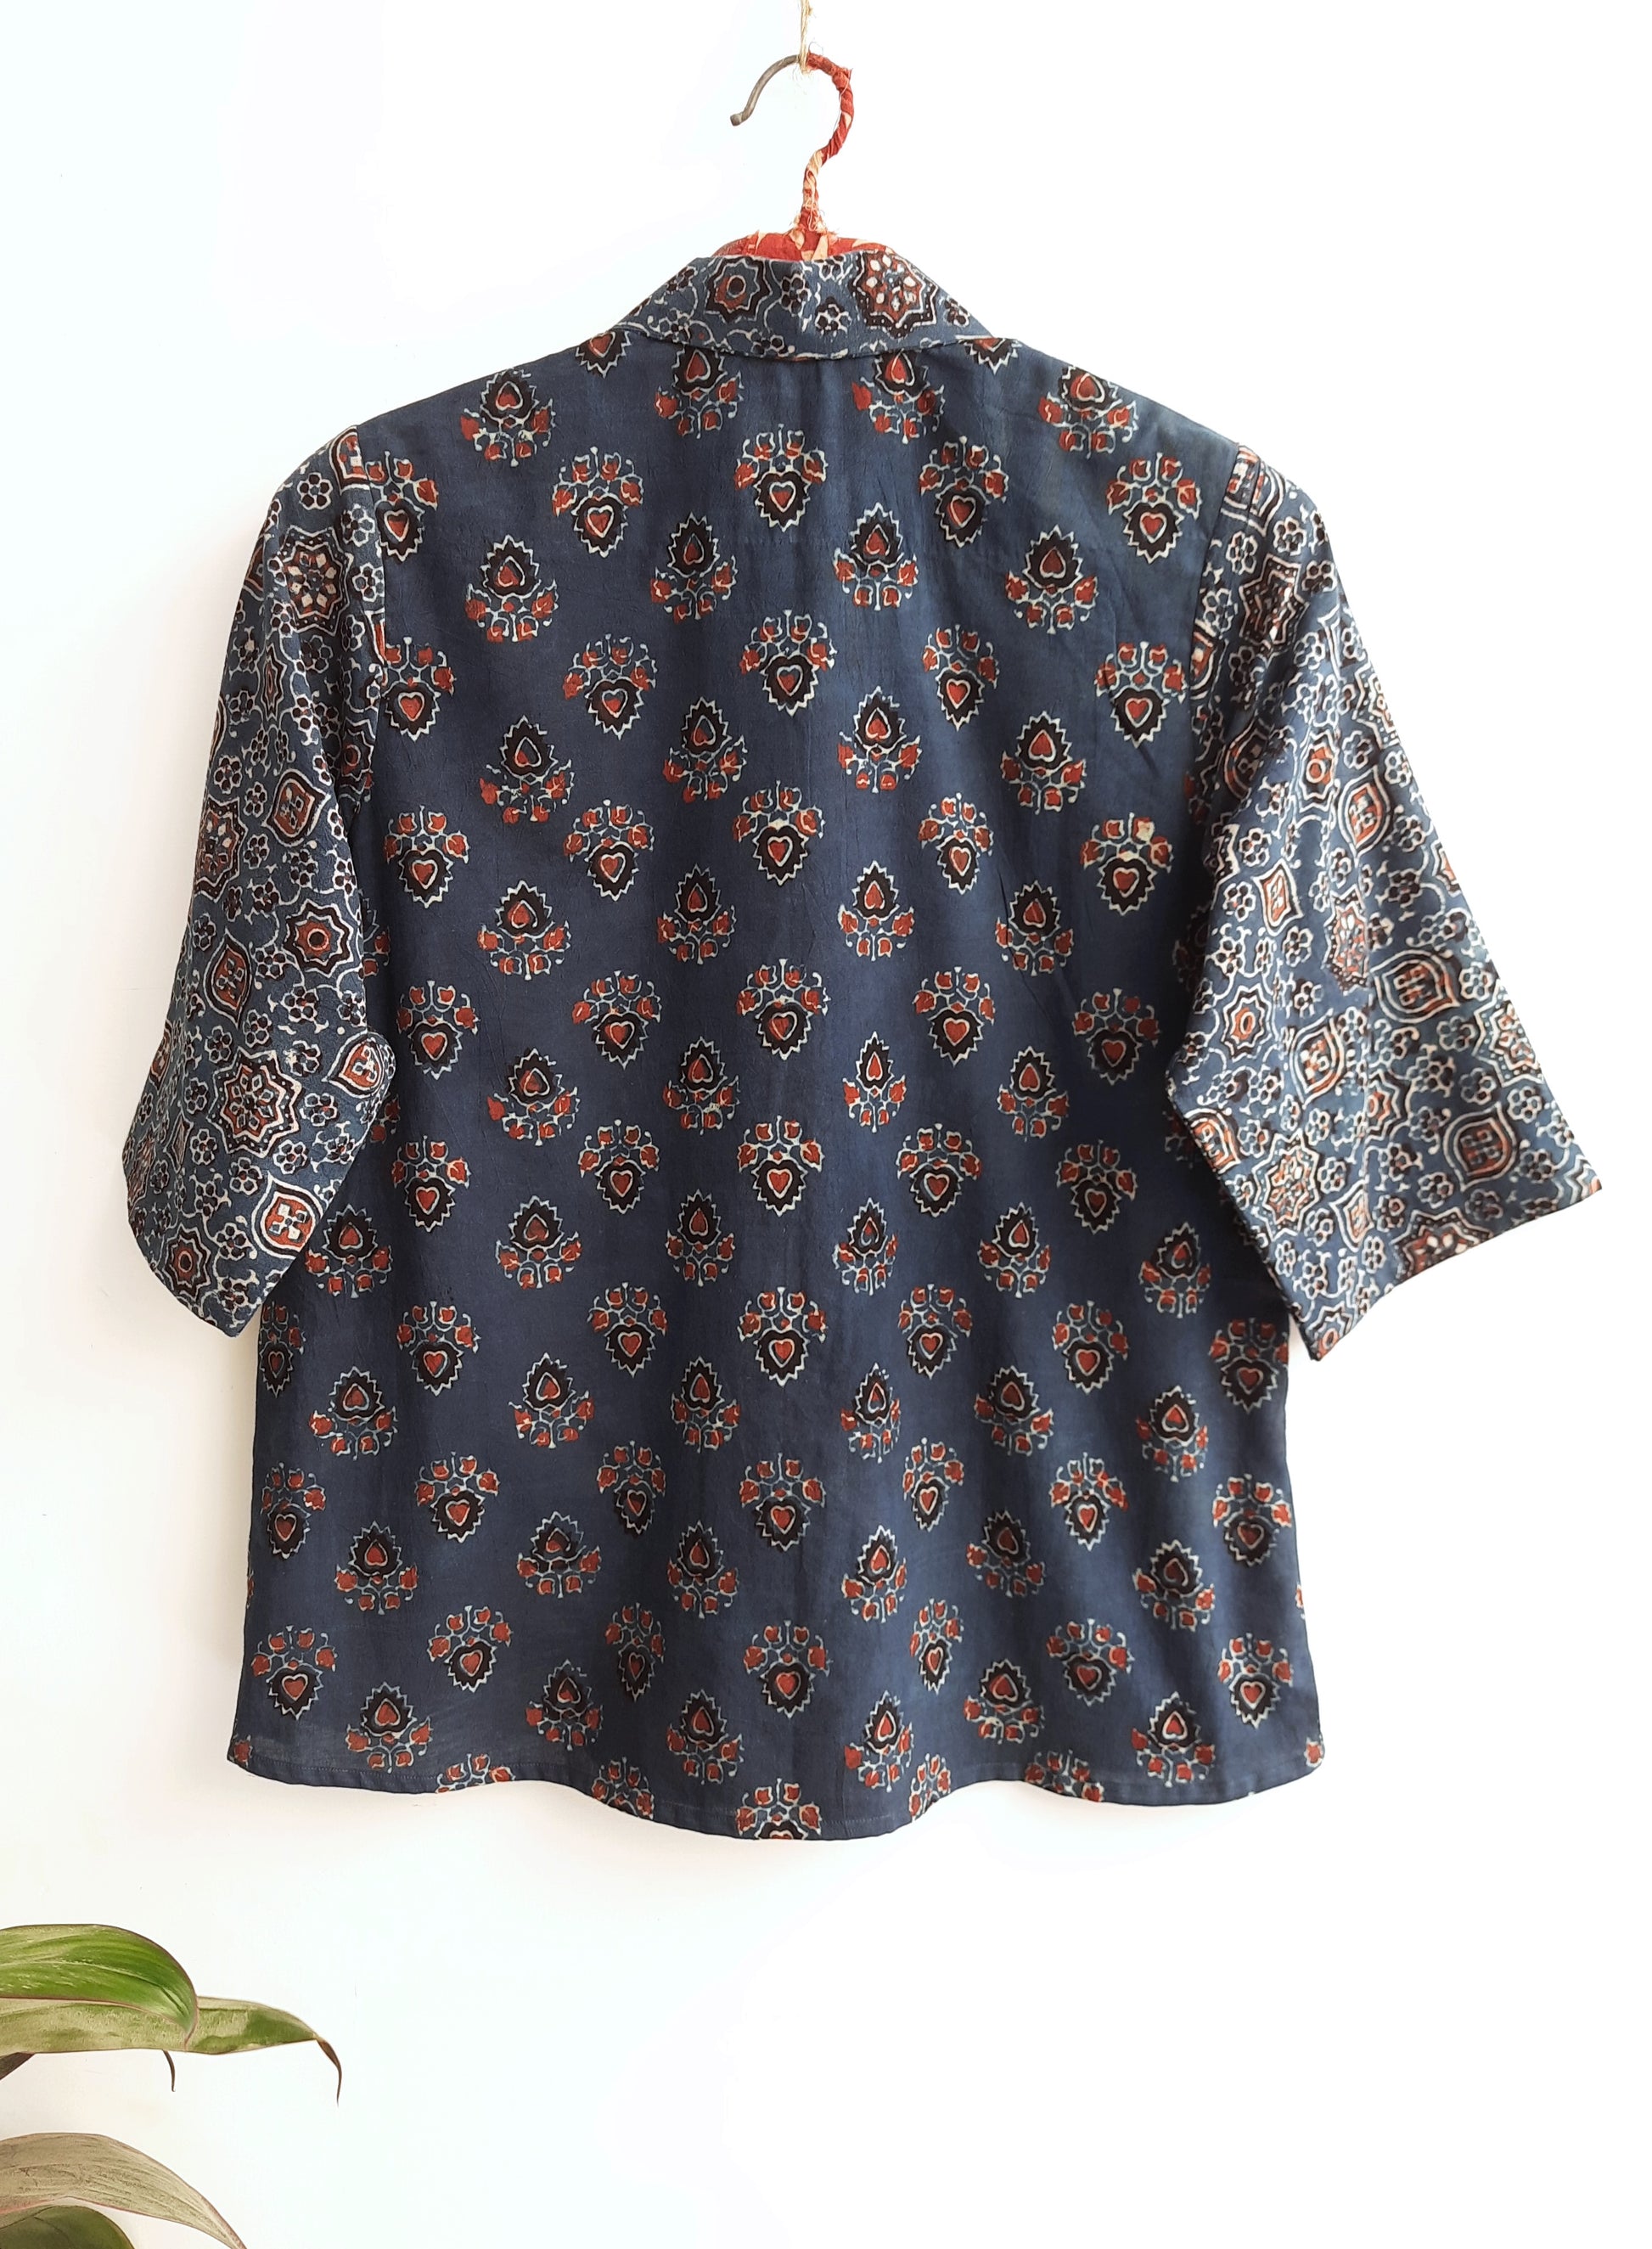 Indigo ajrakh multi prints shirt for women, Ajrakh indigo shirt for her, Slow fashion, Sustainable fashion